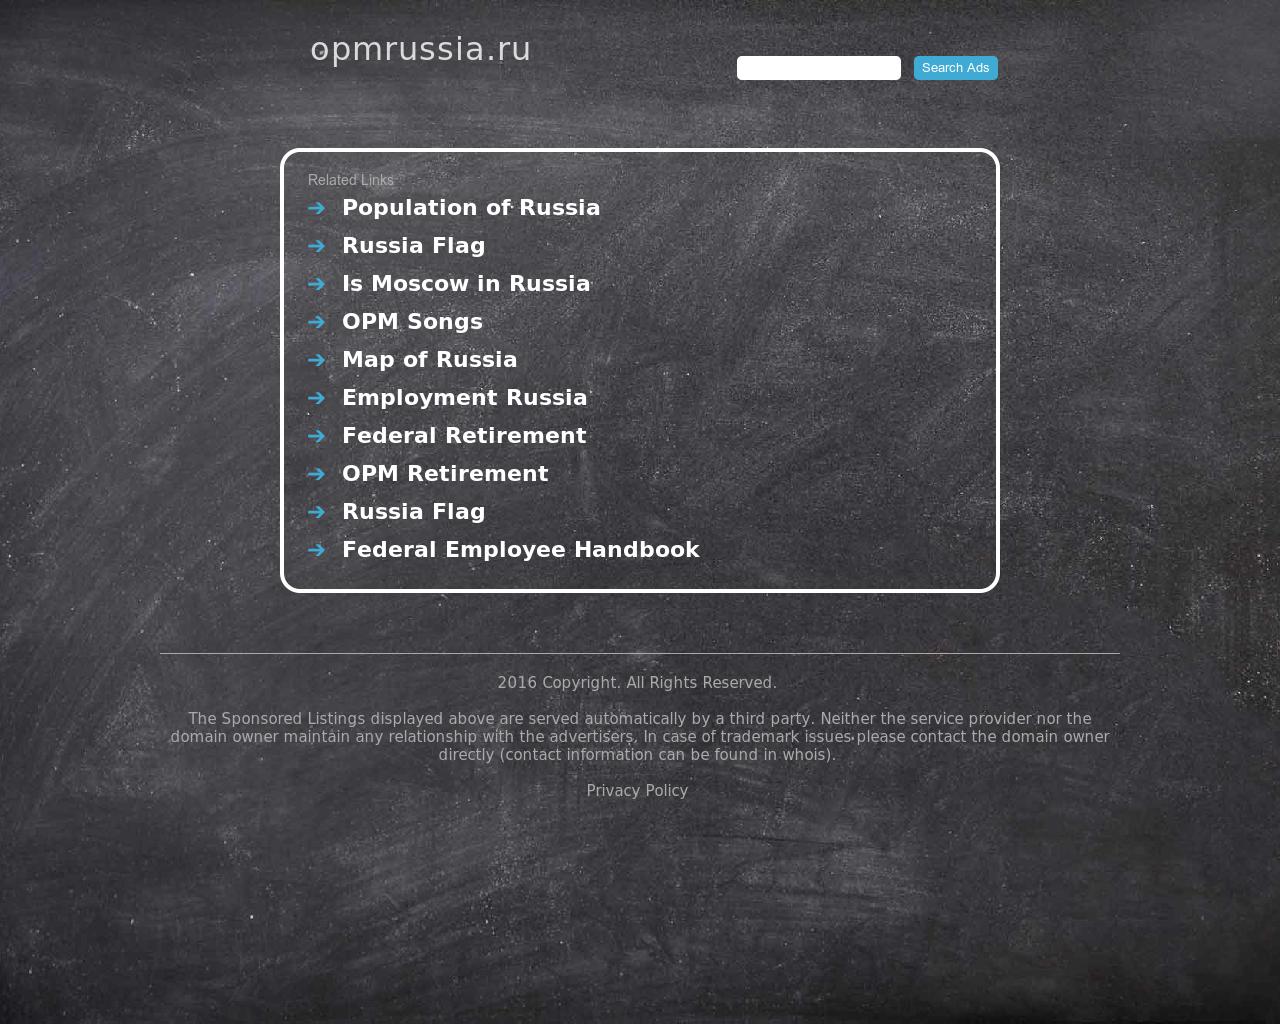 Изображение сайта opmrussia.ru в разрешении 1280x1024